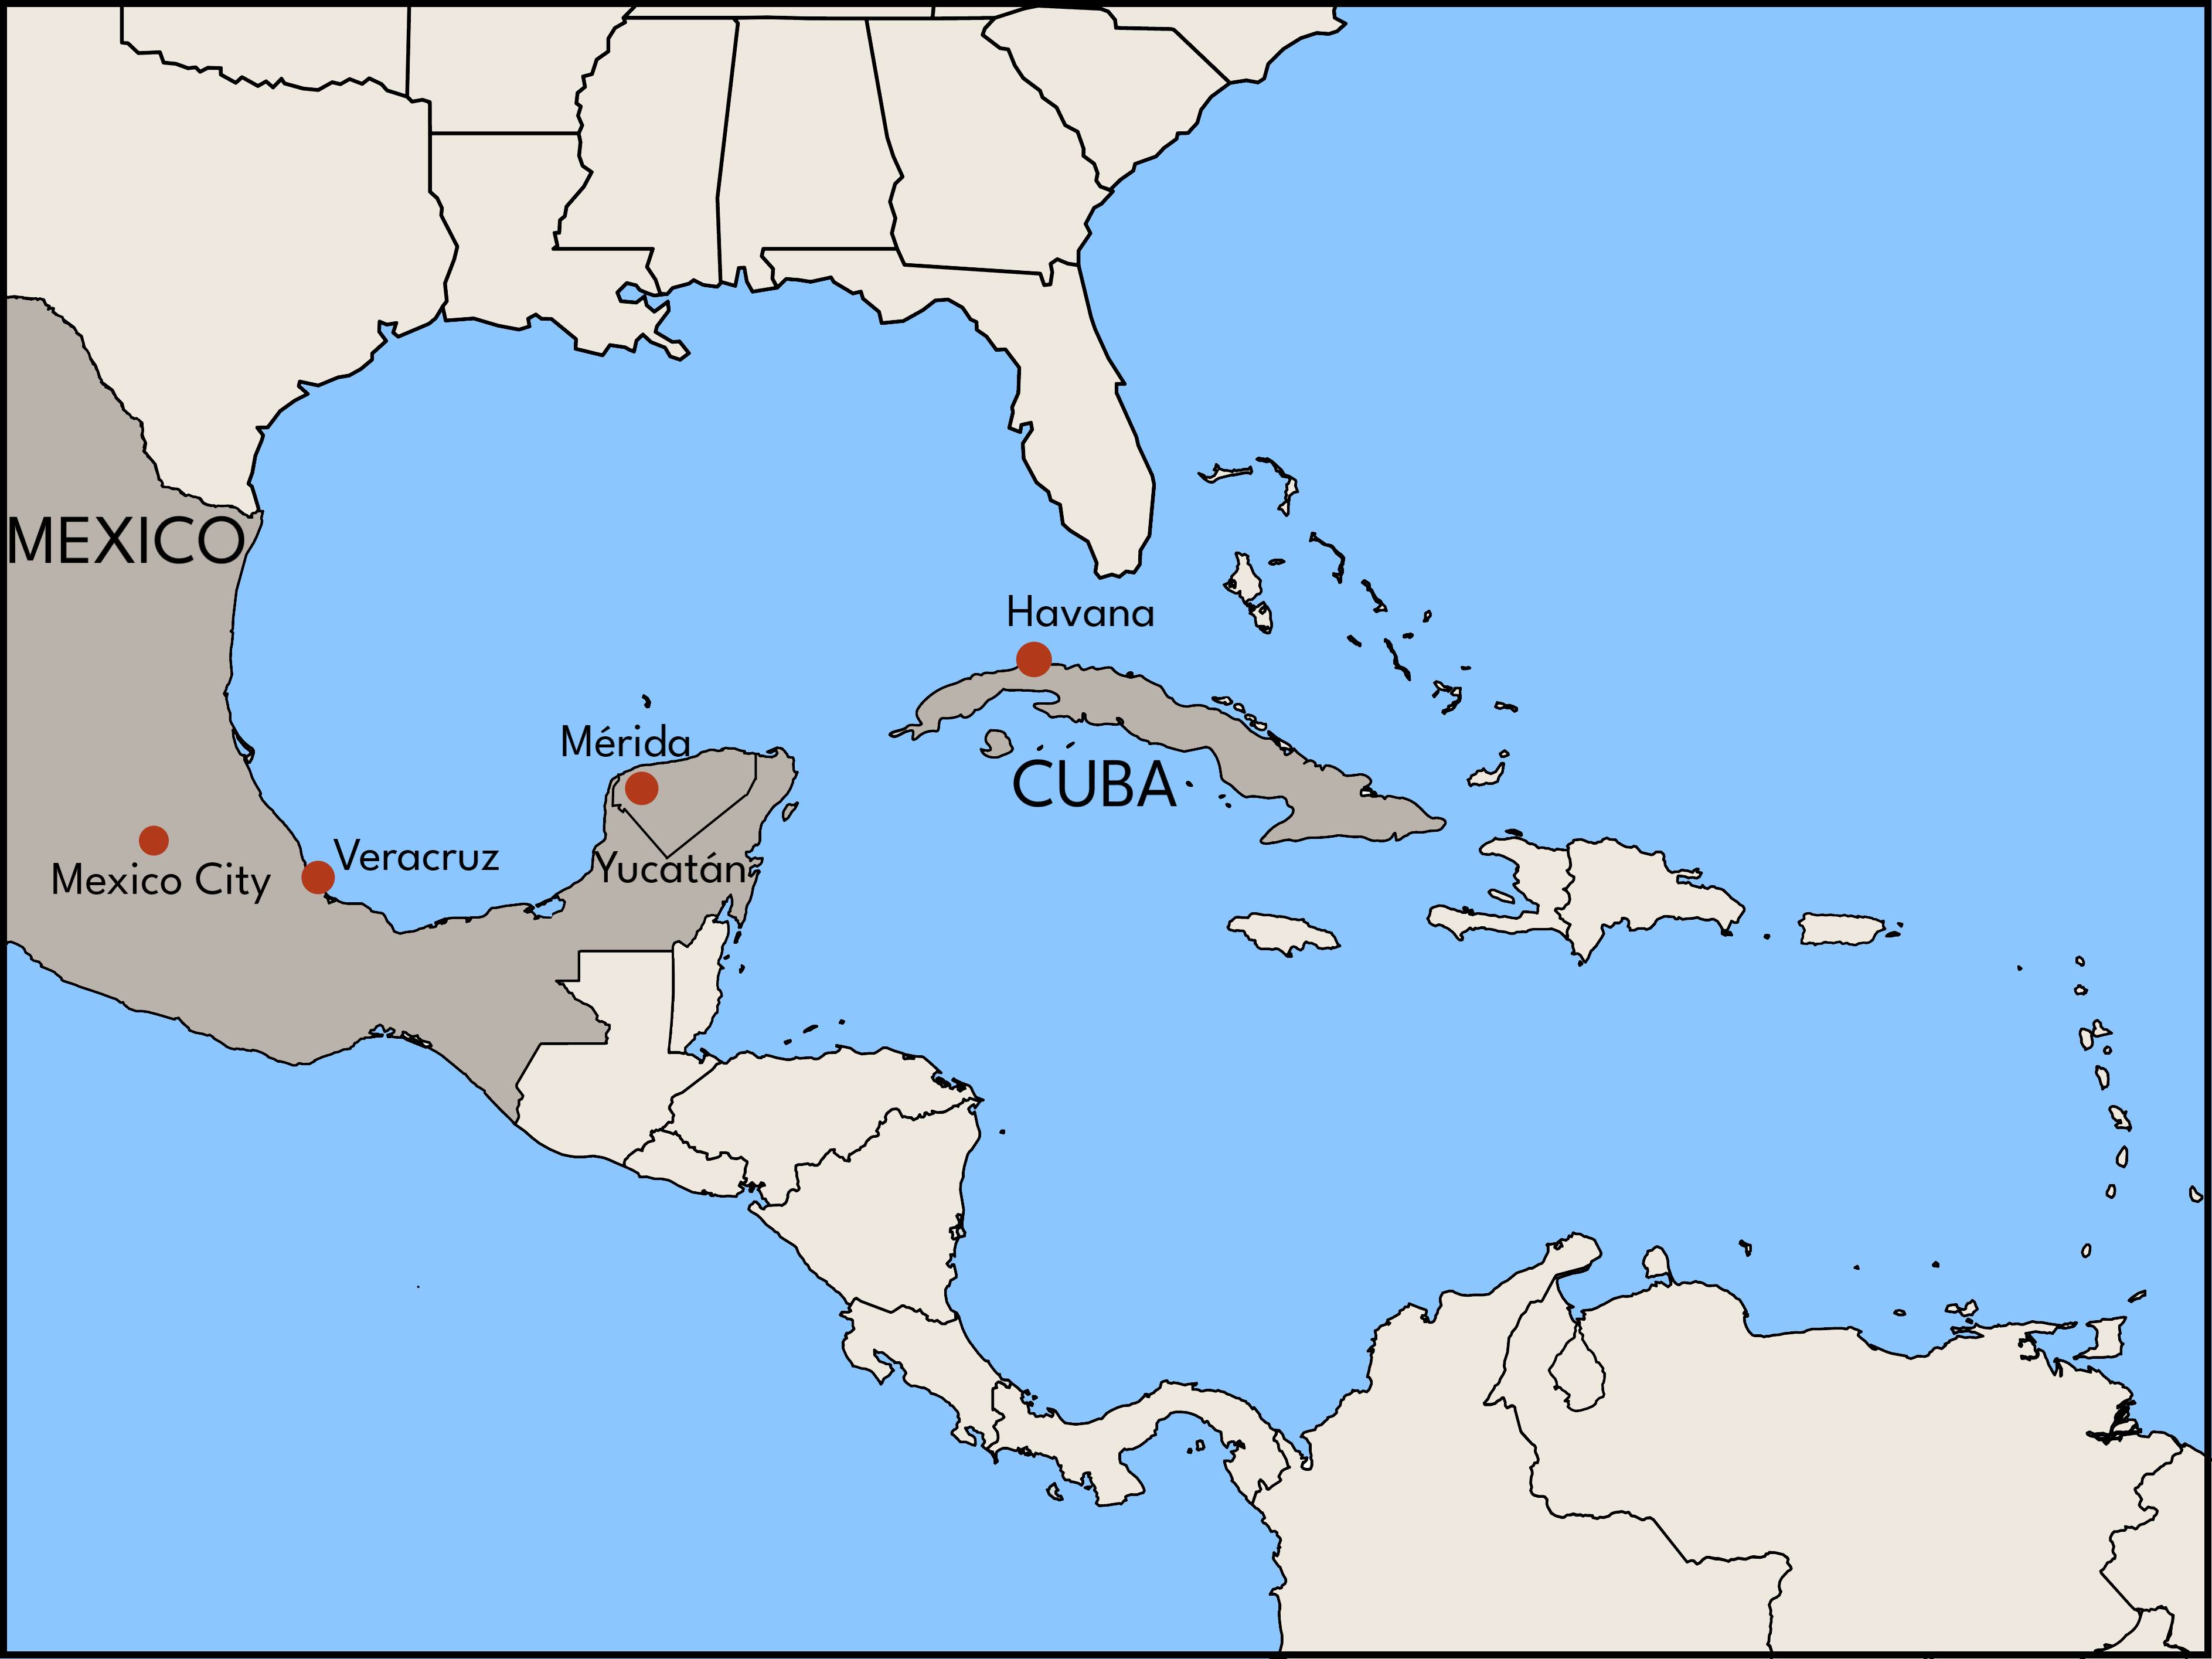 Map of Caribbean highlighting Havana, Cuba, and cities in Mexico, including Veracruz, Mexico City and Mérida, Yucatán.